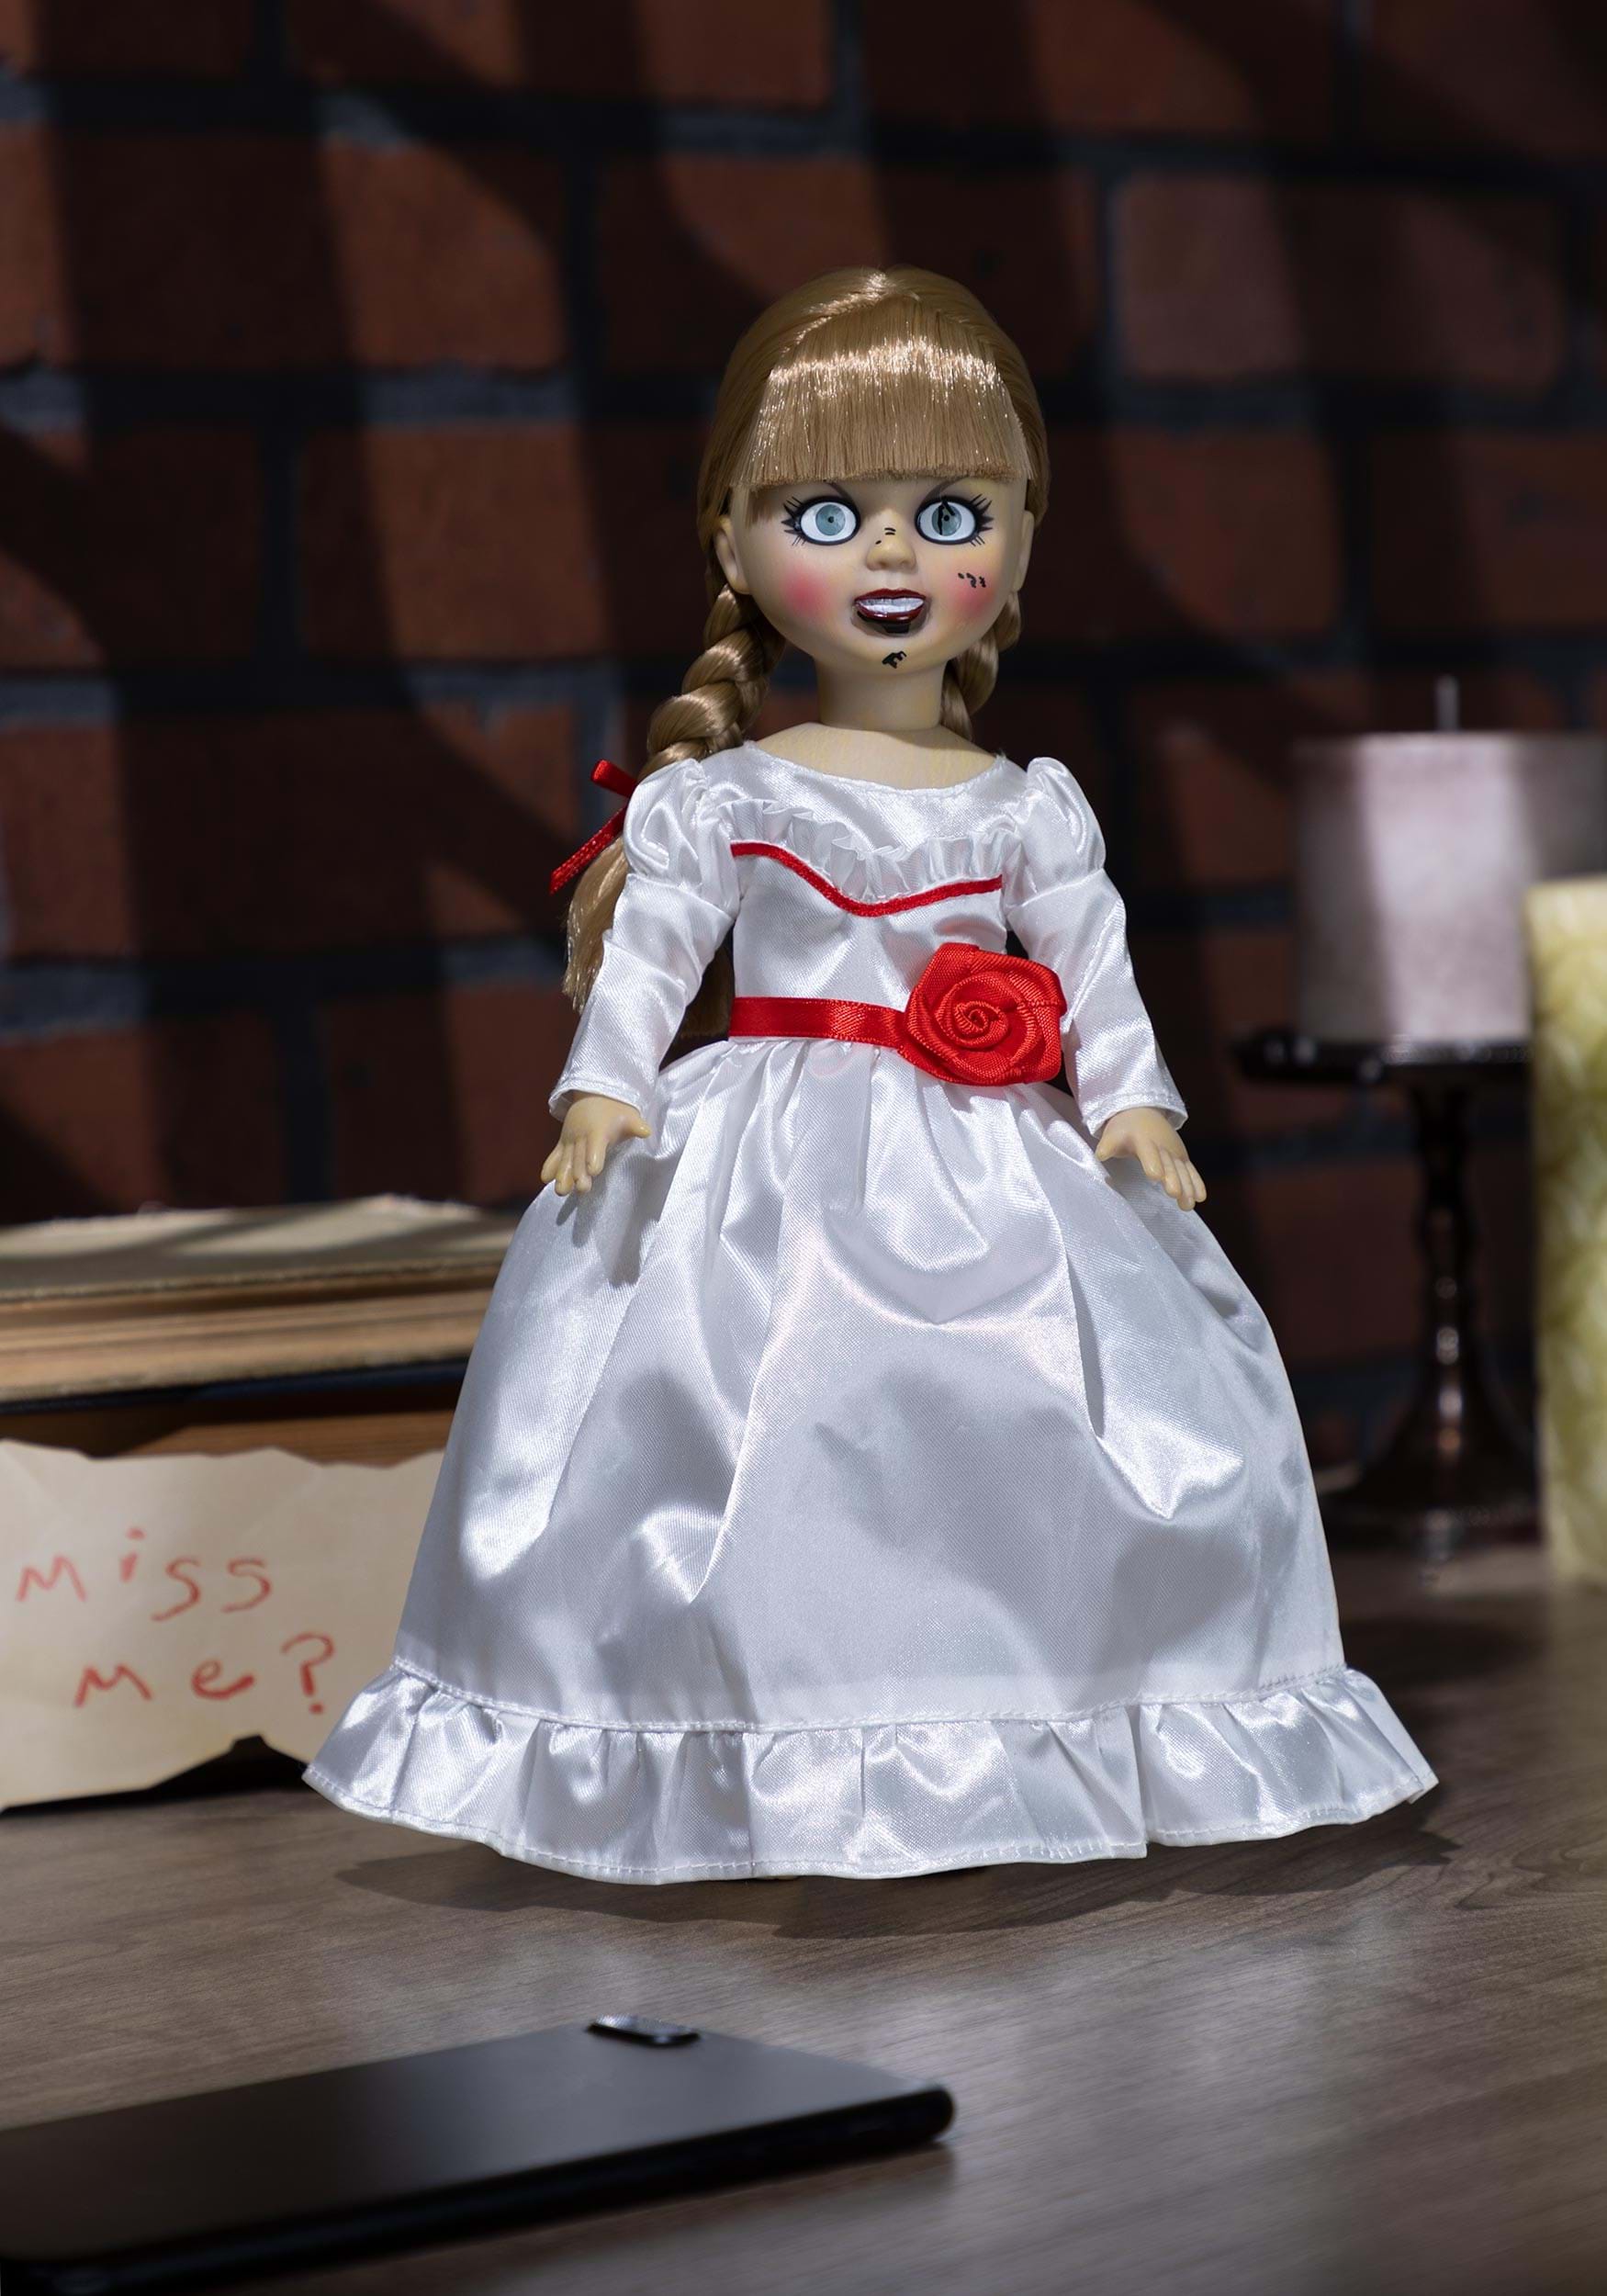 Annabelle Living Dead Dolls 10 Inch Doll